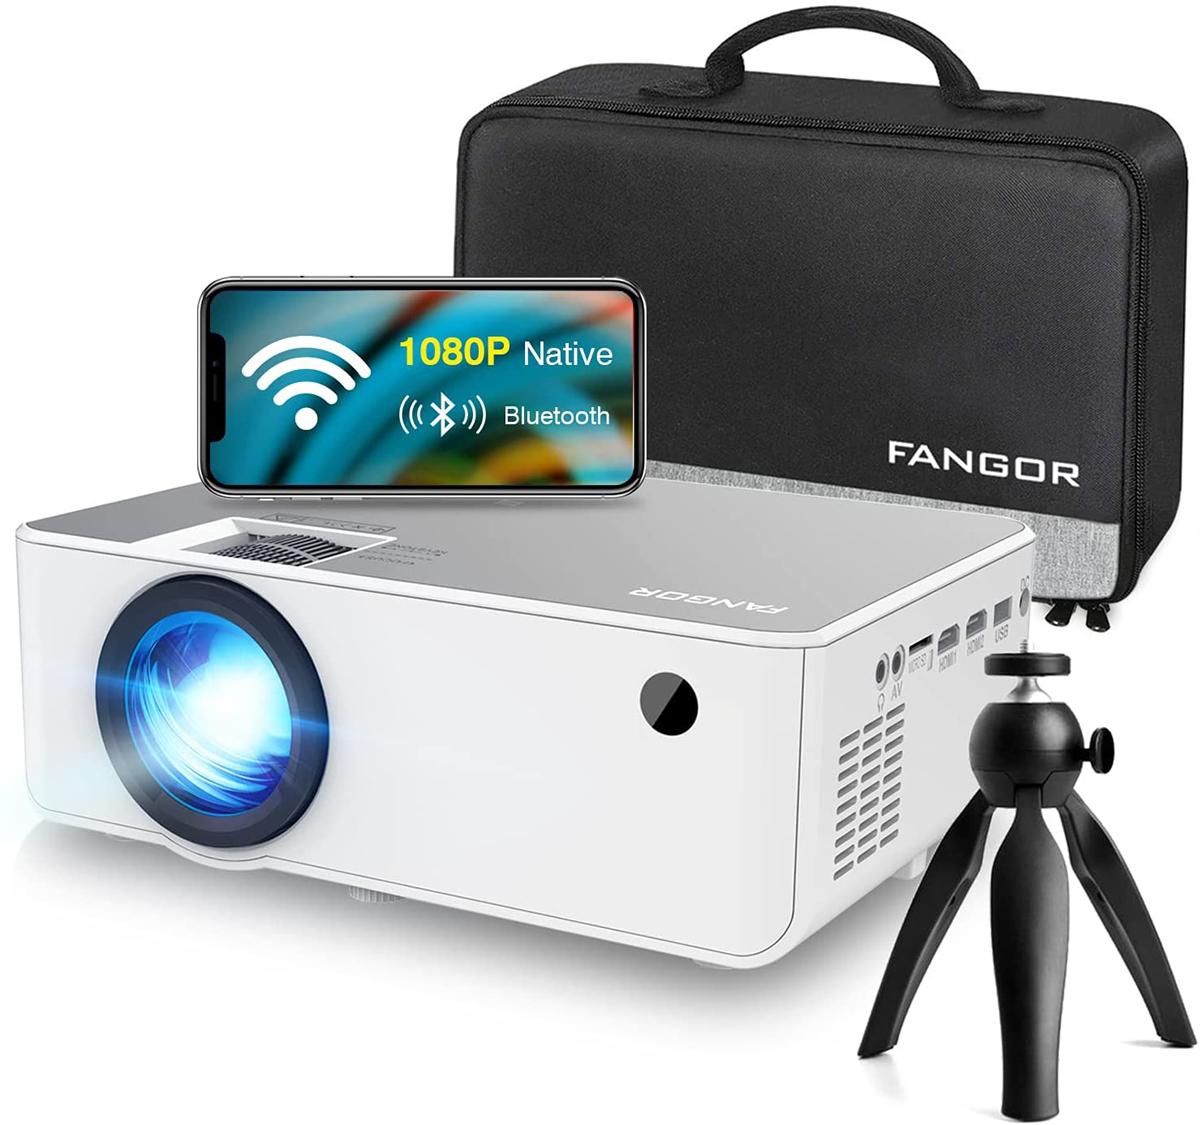 Fangor 1080P HD Wifi Bluetooth Projector for $132.98 Shipped